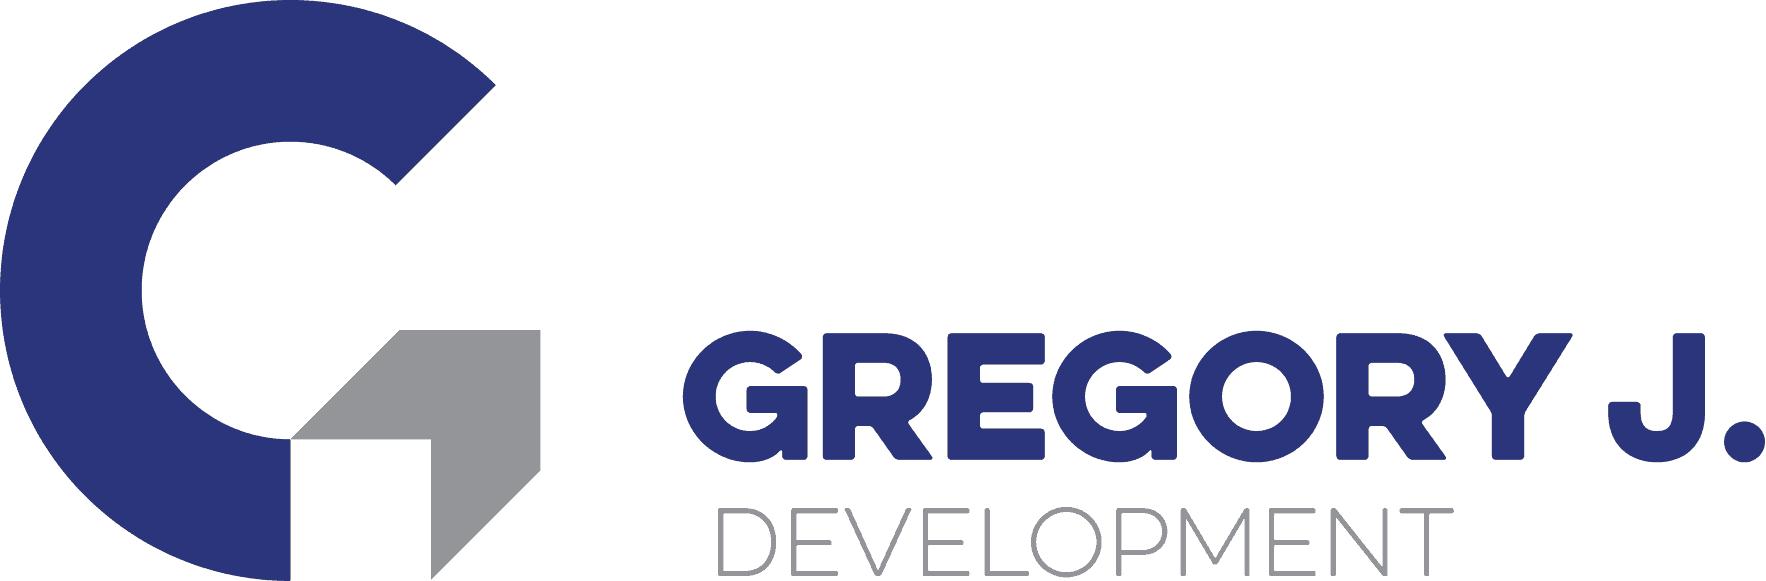 Gregory Logo - Durham Region based WordPress help